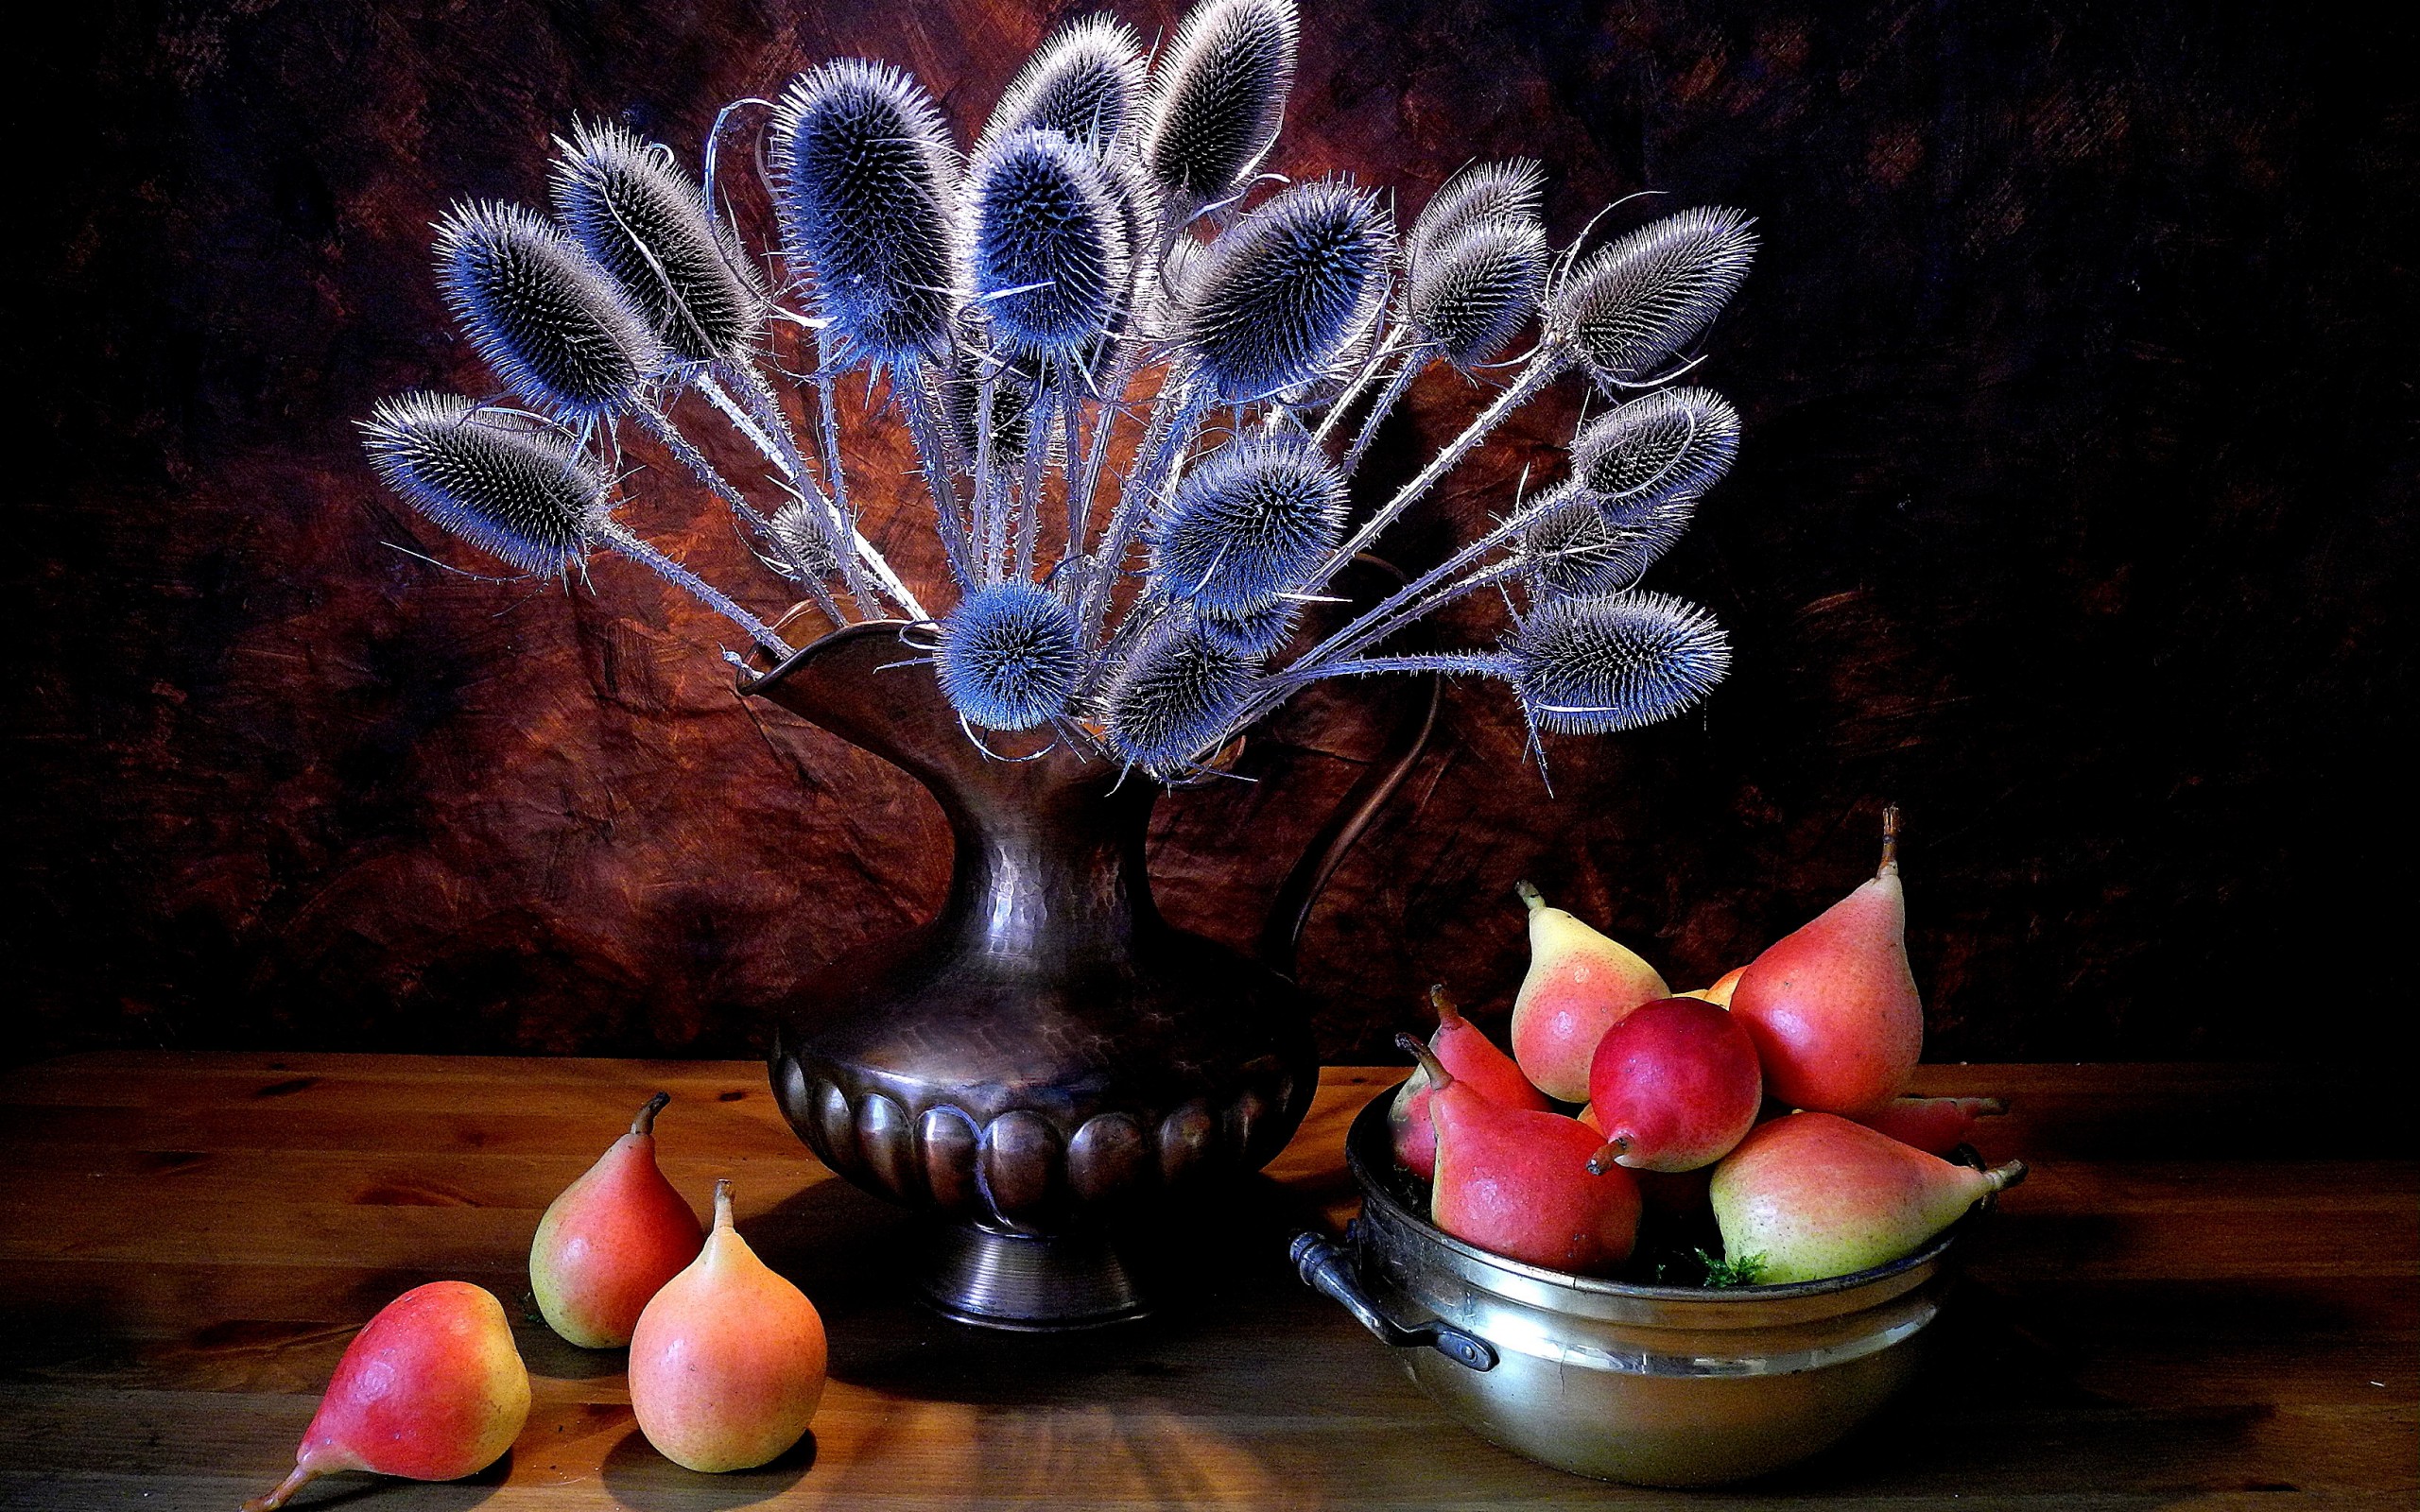 натюрморт, груши, фрукты, красивые обои, Still life, pears, fruit, beautiful wallpaper